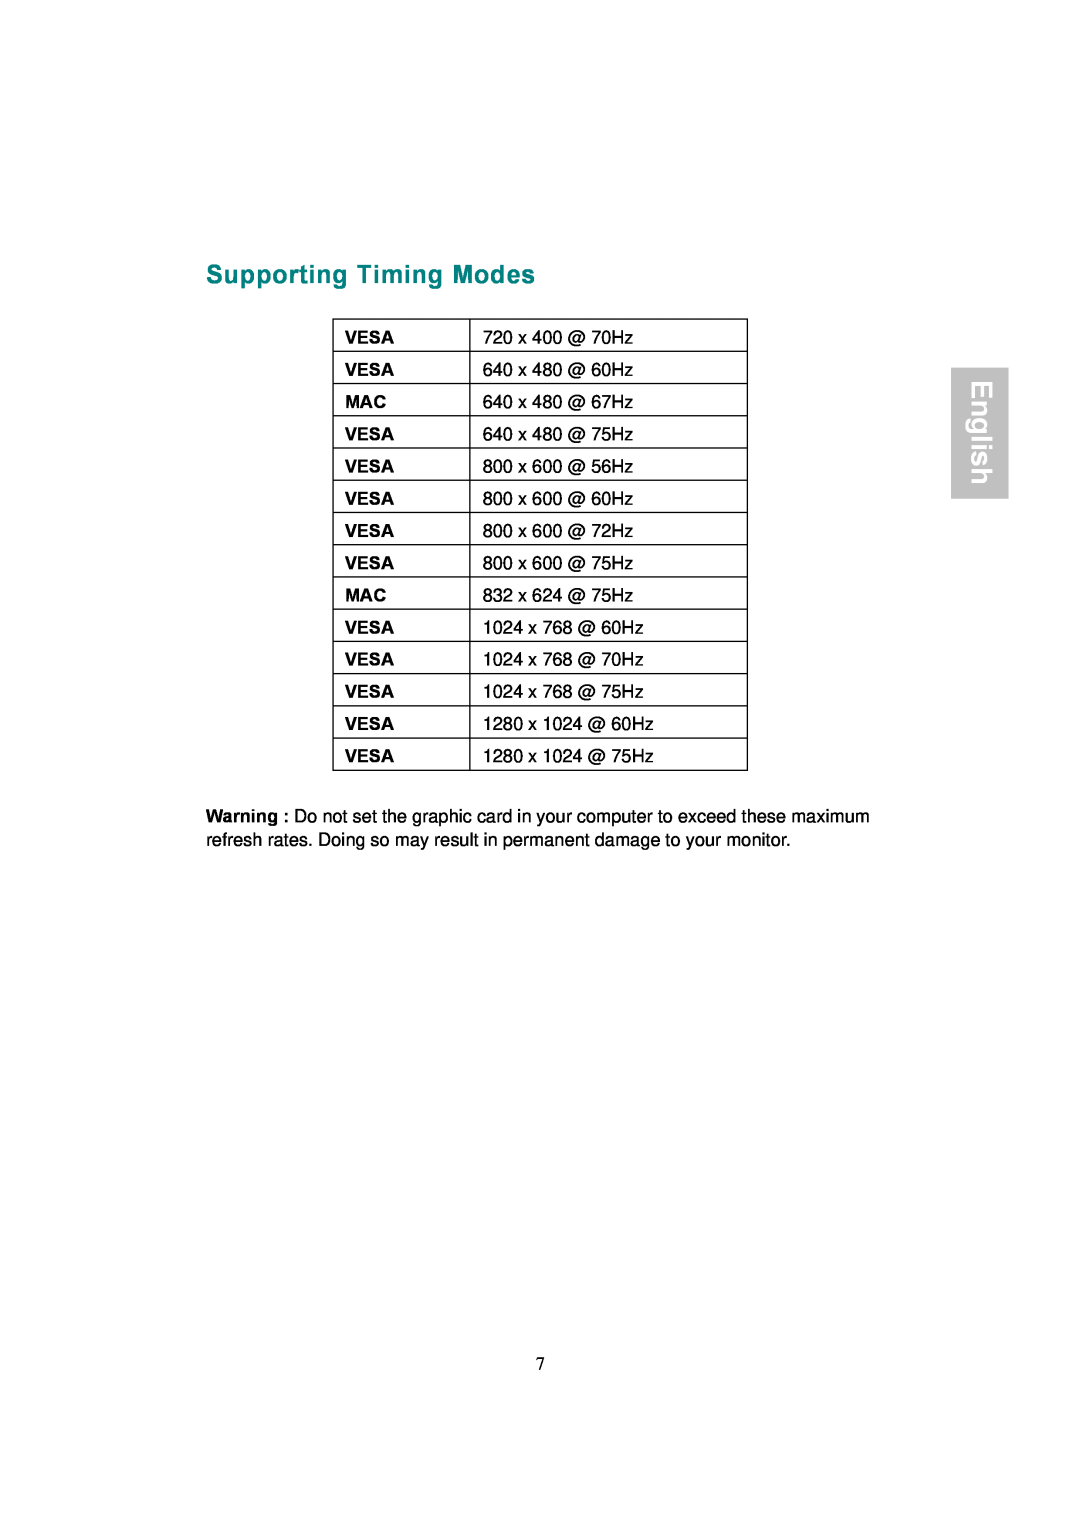 AOC LM742 Supporting Timing Modes, English, Vesa, 720 x 400 @ 70Hz, 640 x 480 @ 60Hz, 640 x 480 @ 67Hz, 640 x 480 @ 75Hz 